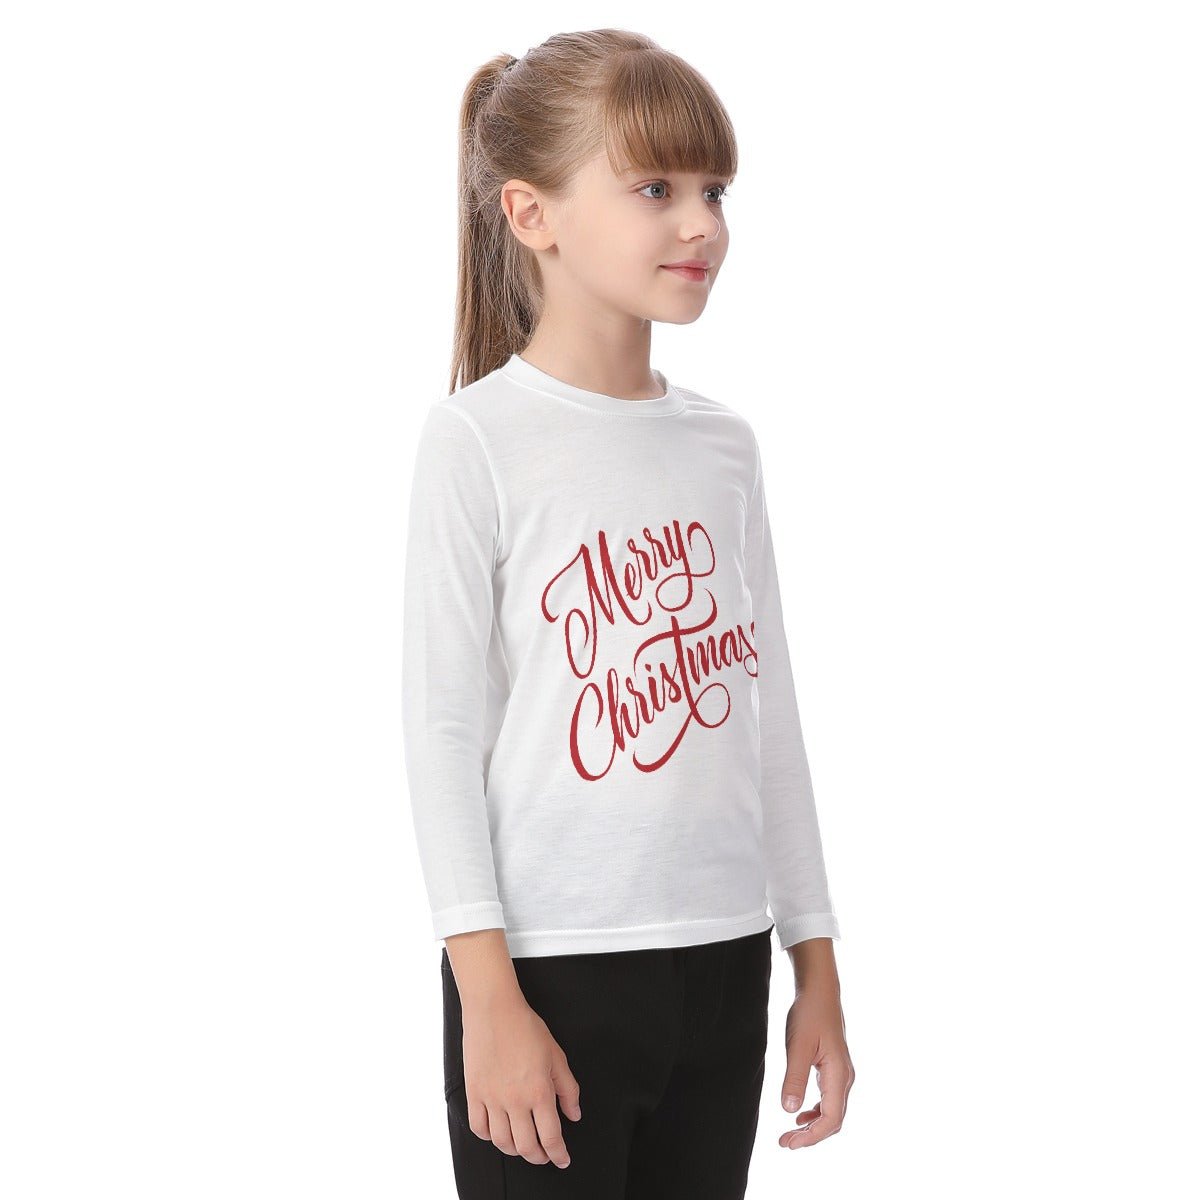 Kid's Long Sleeve Christmas T-shirt - Merry Christmas - White - Festive Style